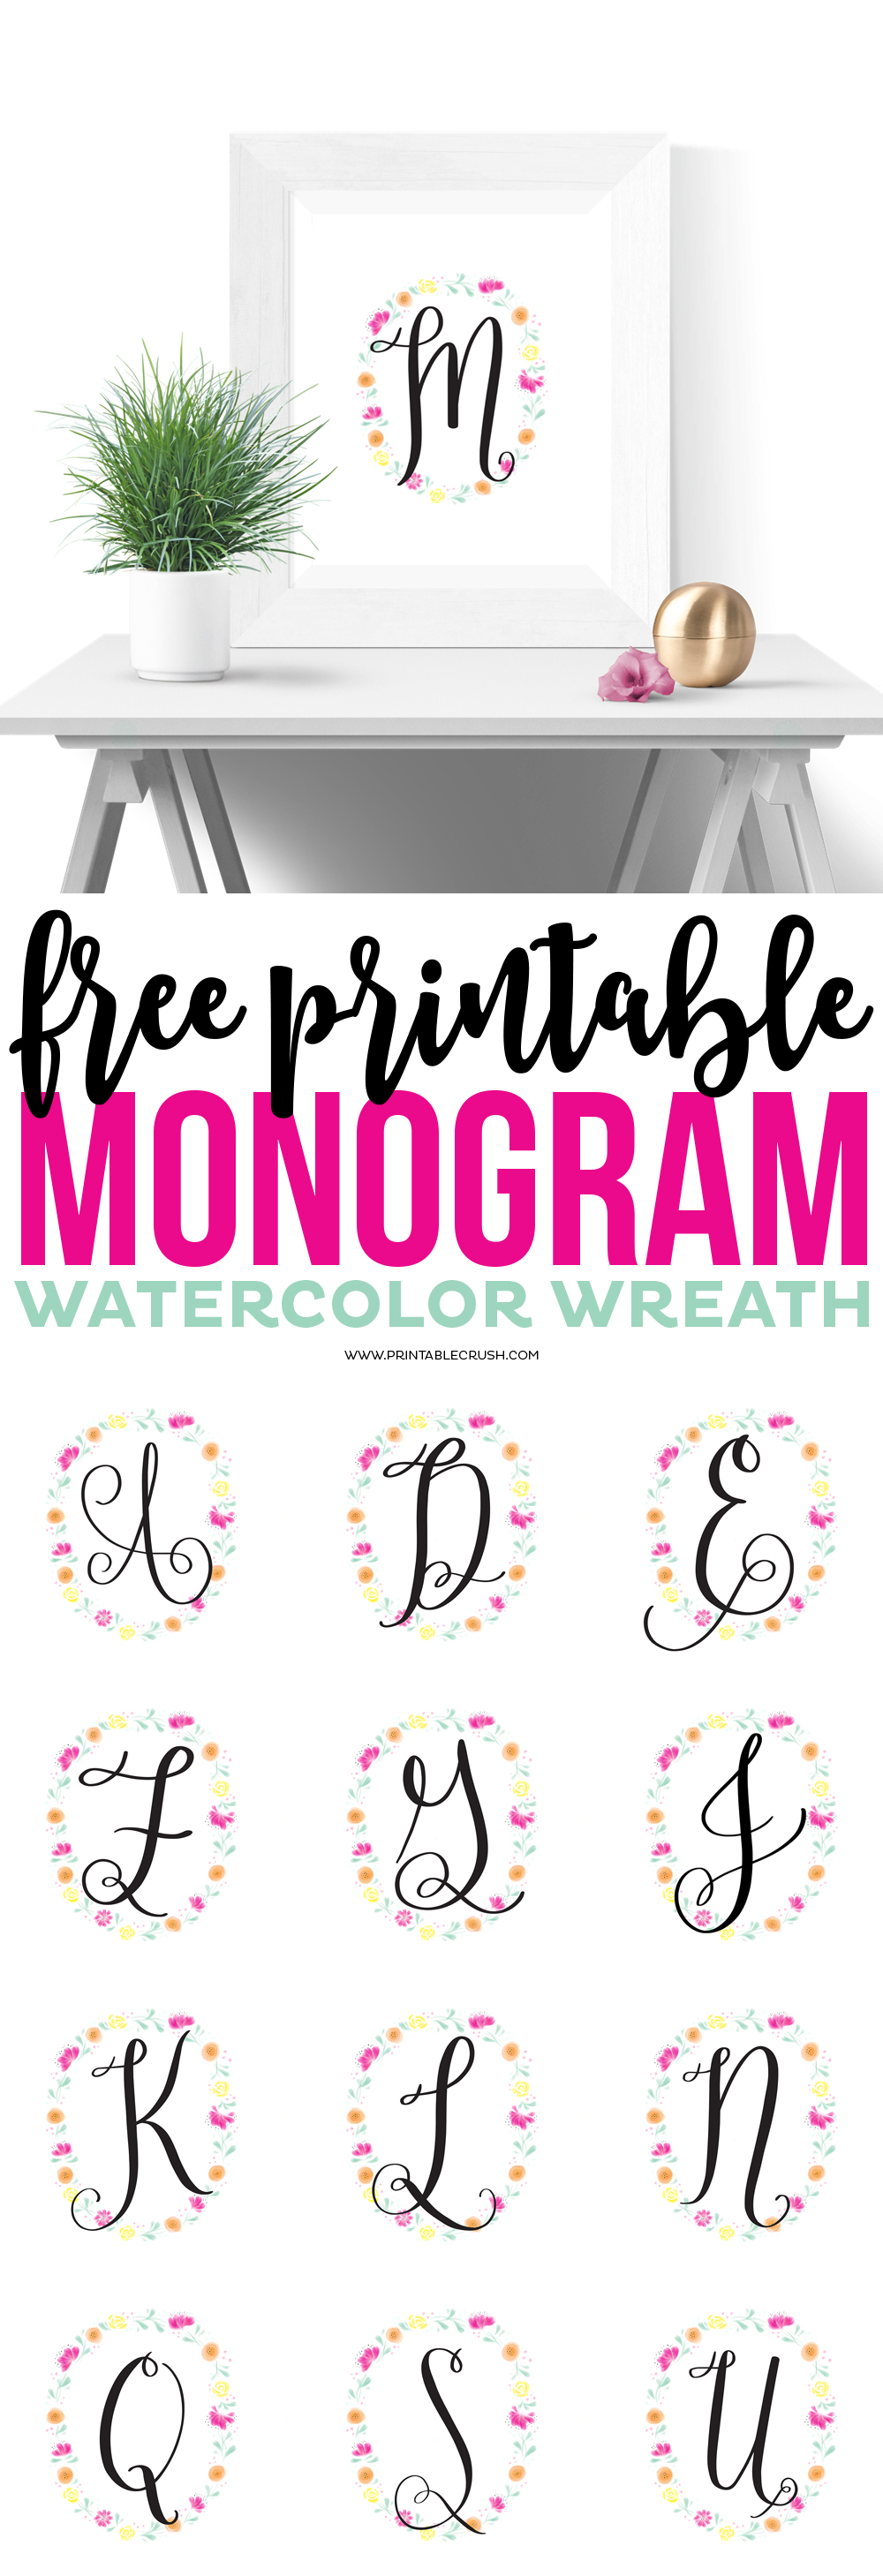 http://printablecrush.com/wp-content/uploads/2017/01/FREE-Printable-Monogram-Watercolor-Wreath-2.jpg